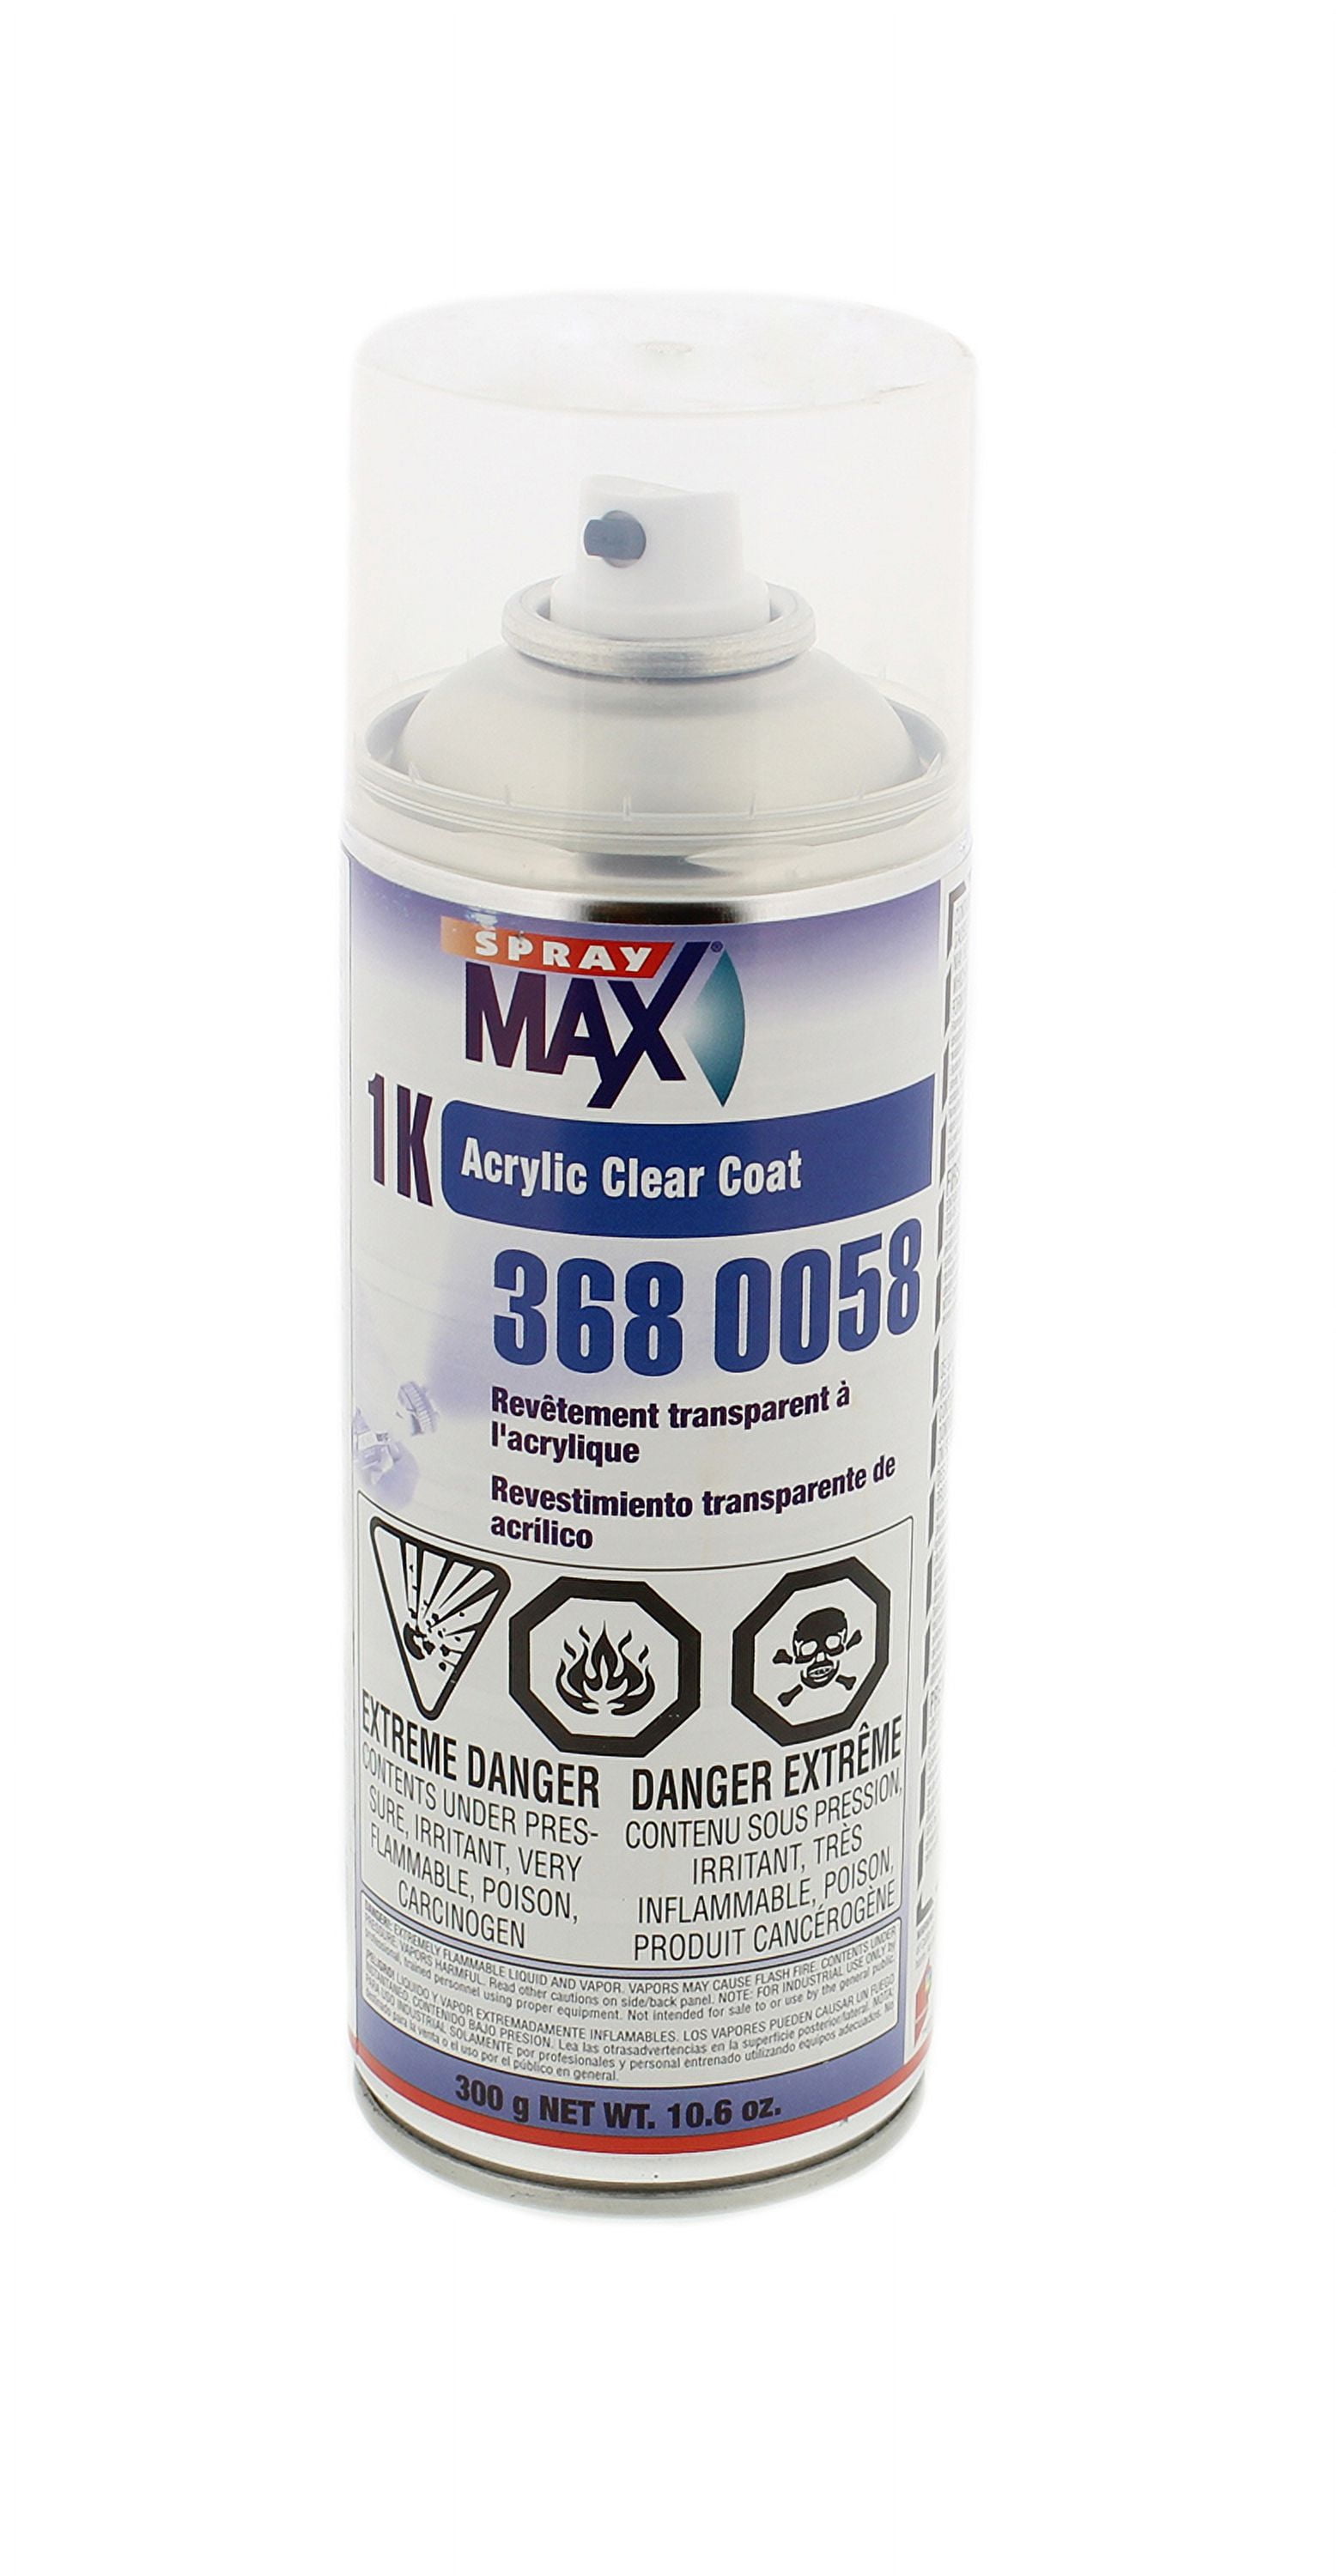 USC Spray Max 2k High Gloss Clearcoat Aerosol (2 PACK) 